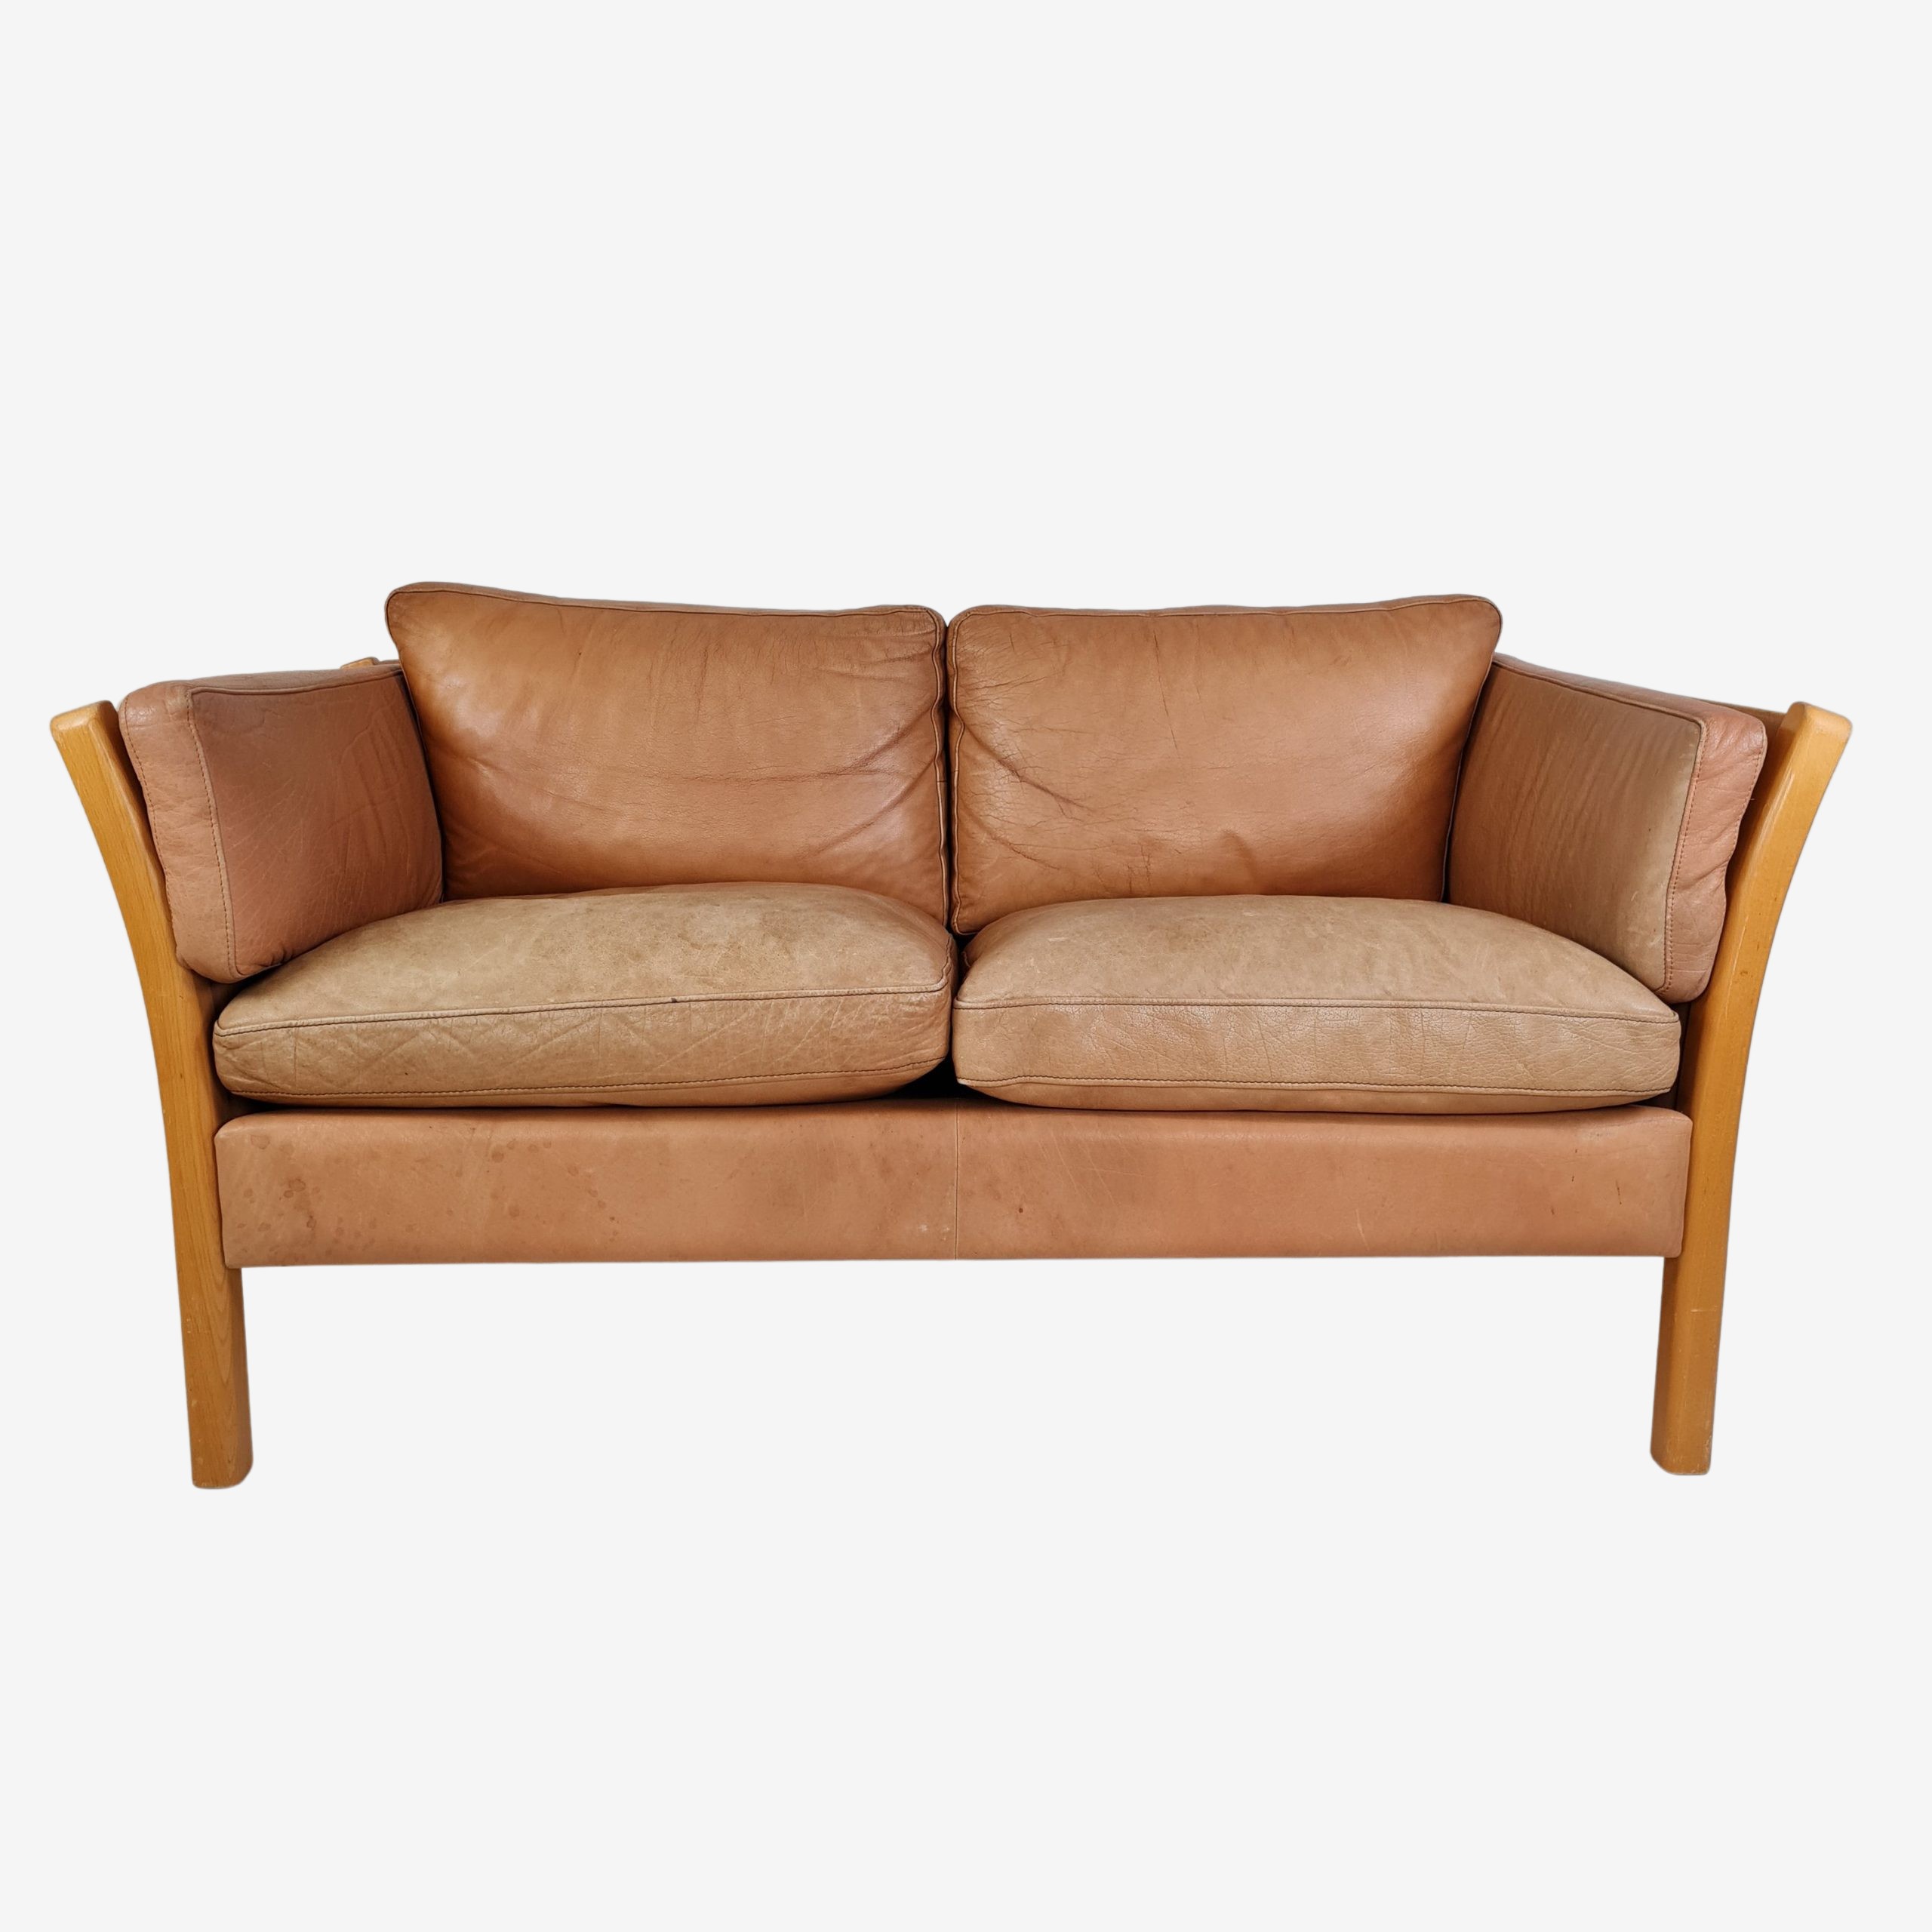 2 person sofa | Model Paula | Stouby